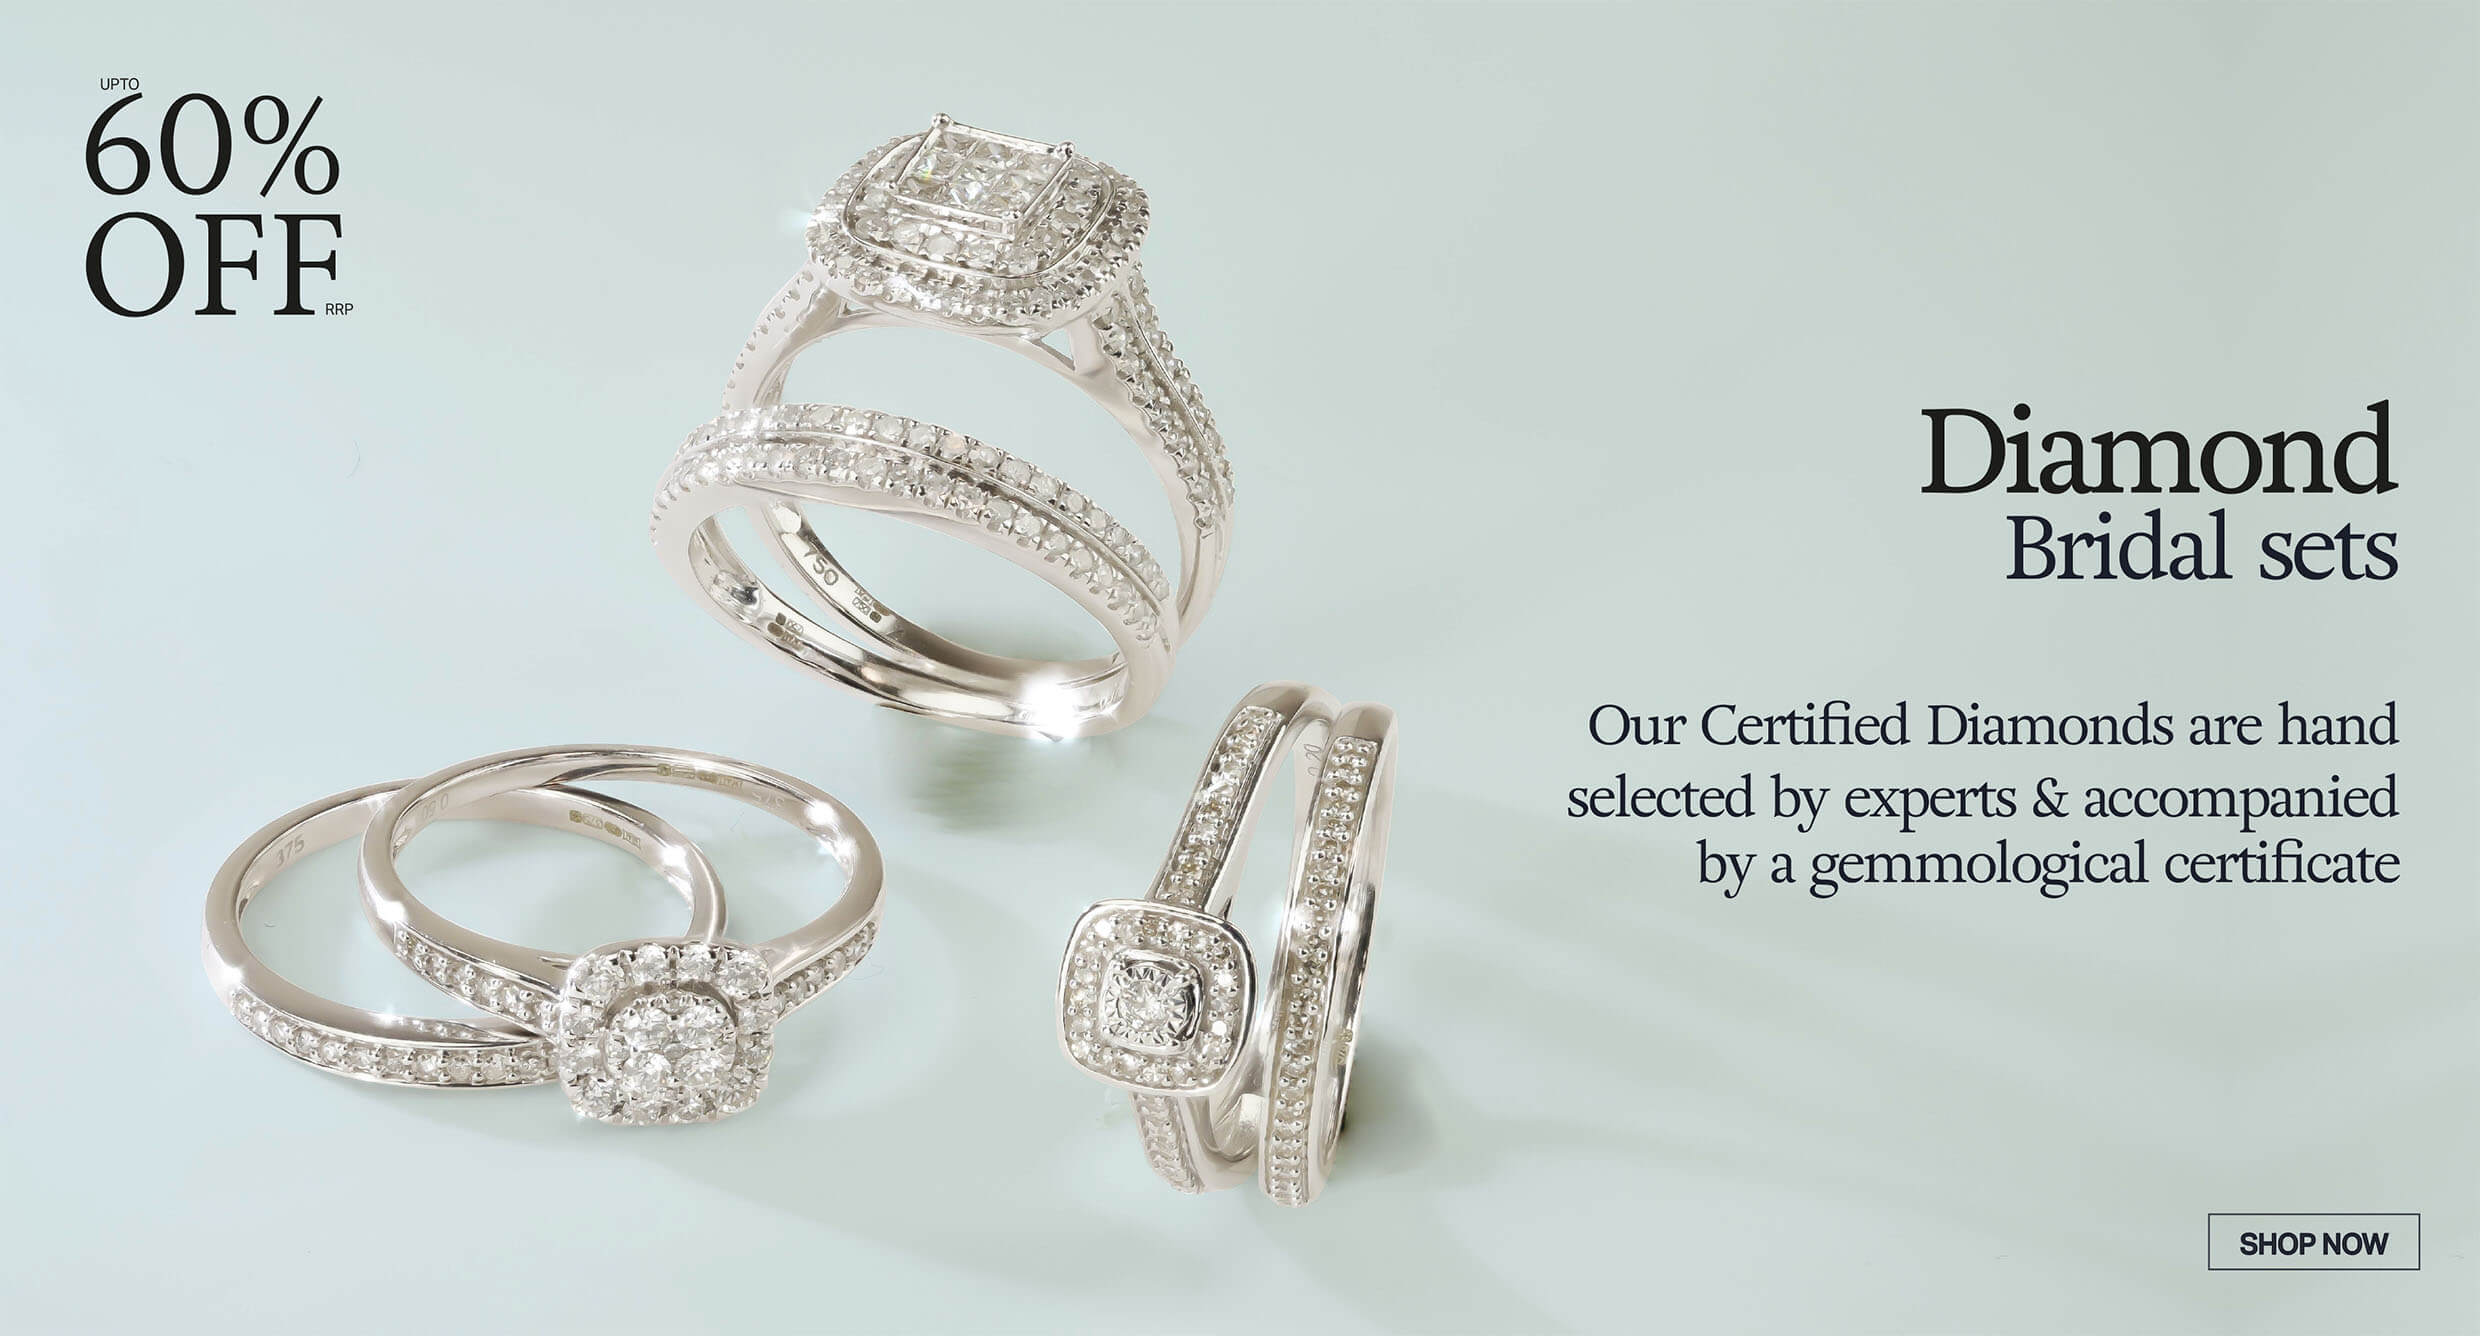 Jewellery - Engagement Rings - Wedding Rings - Warren James Jewellers